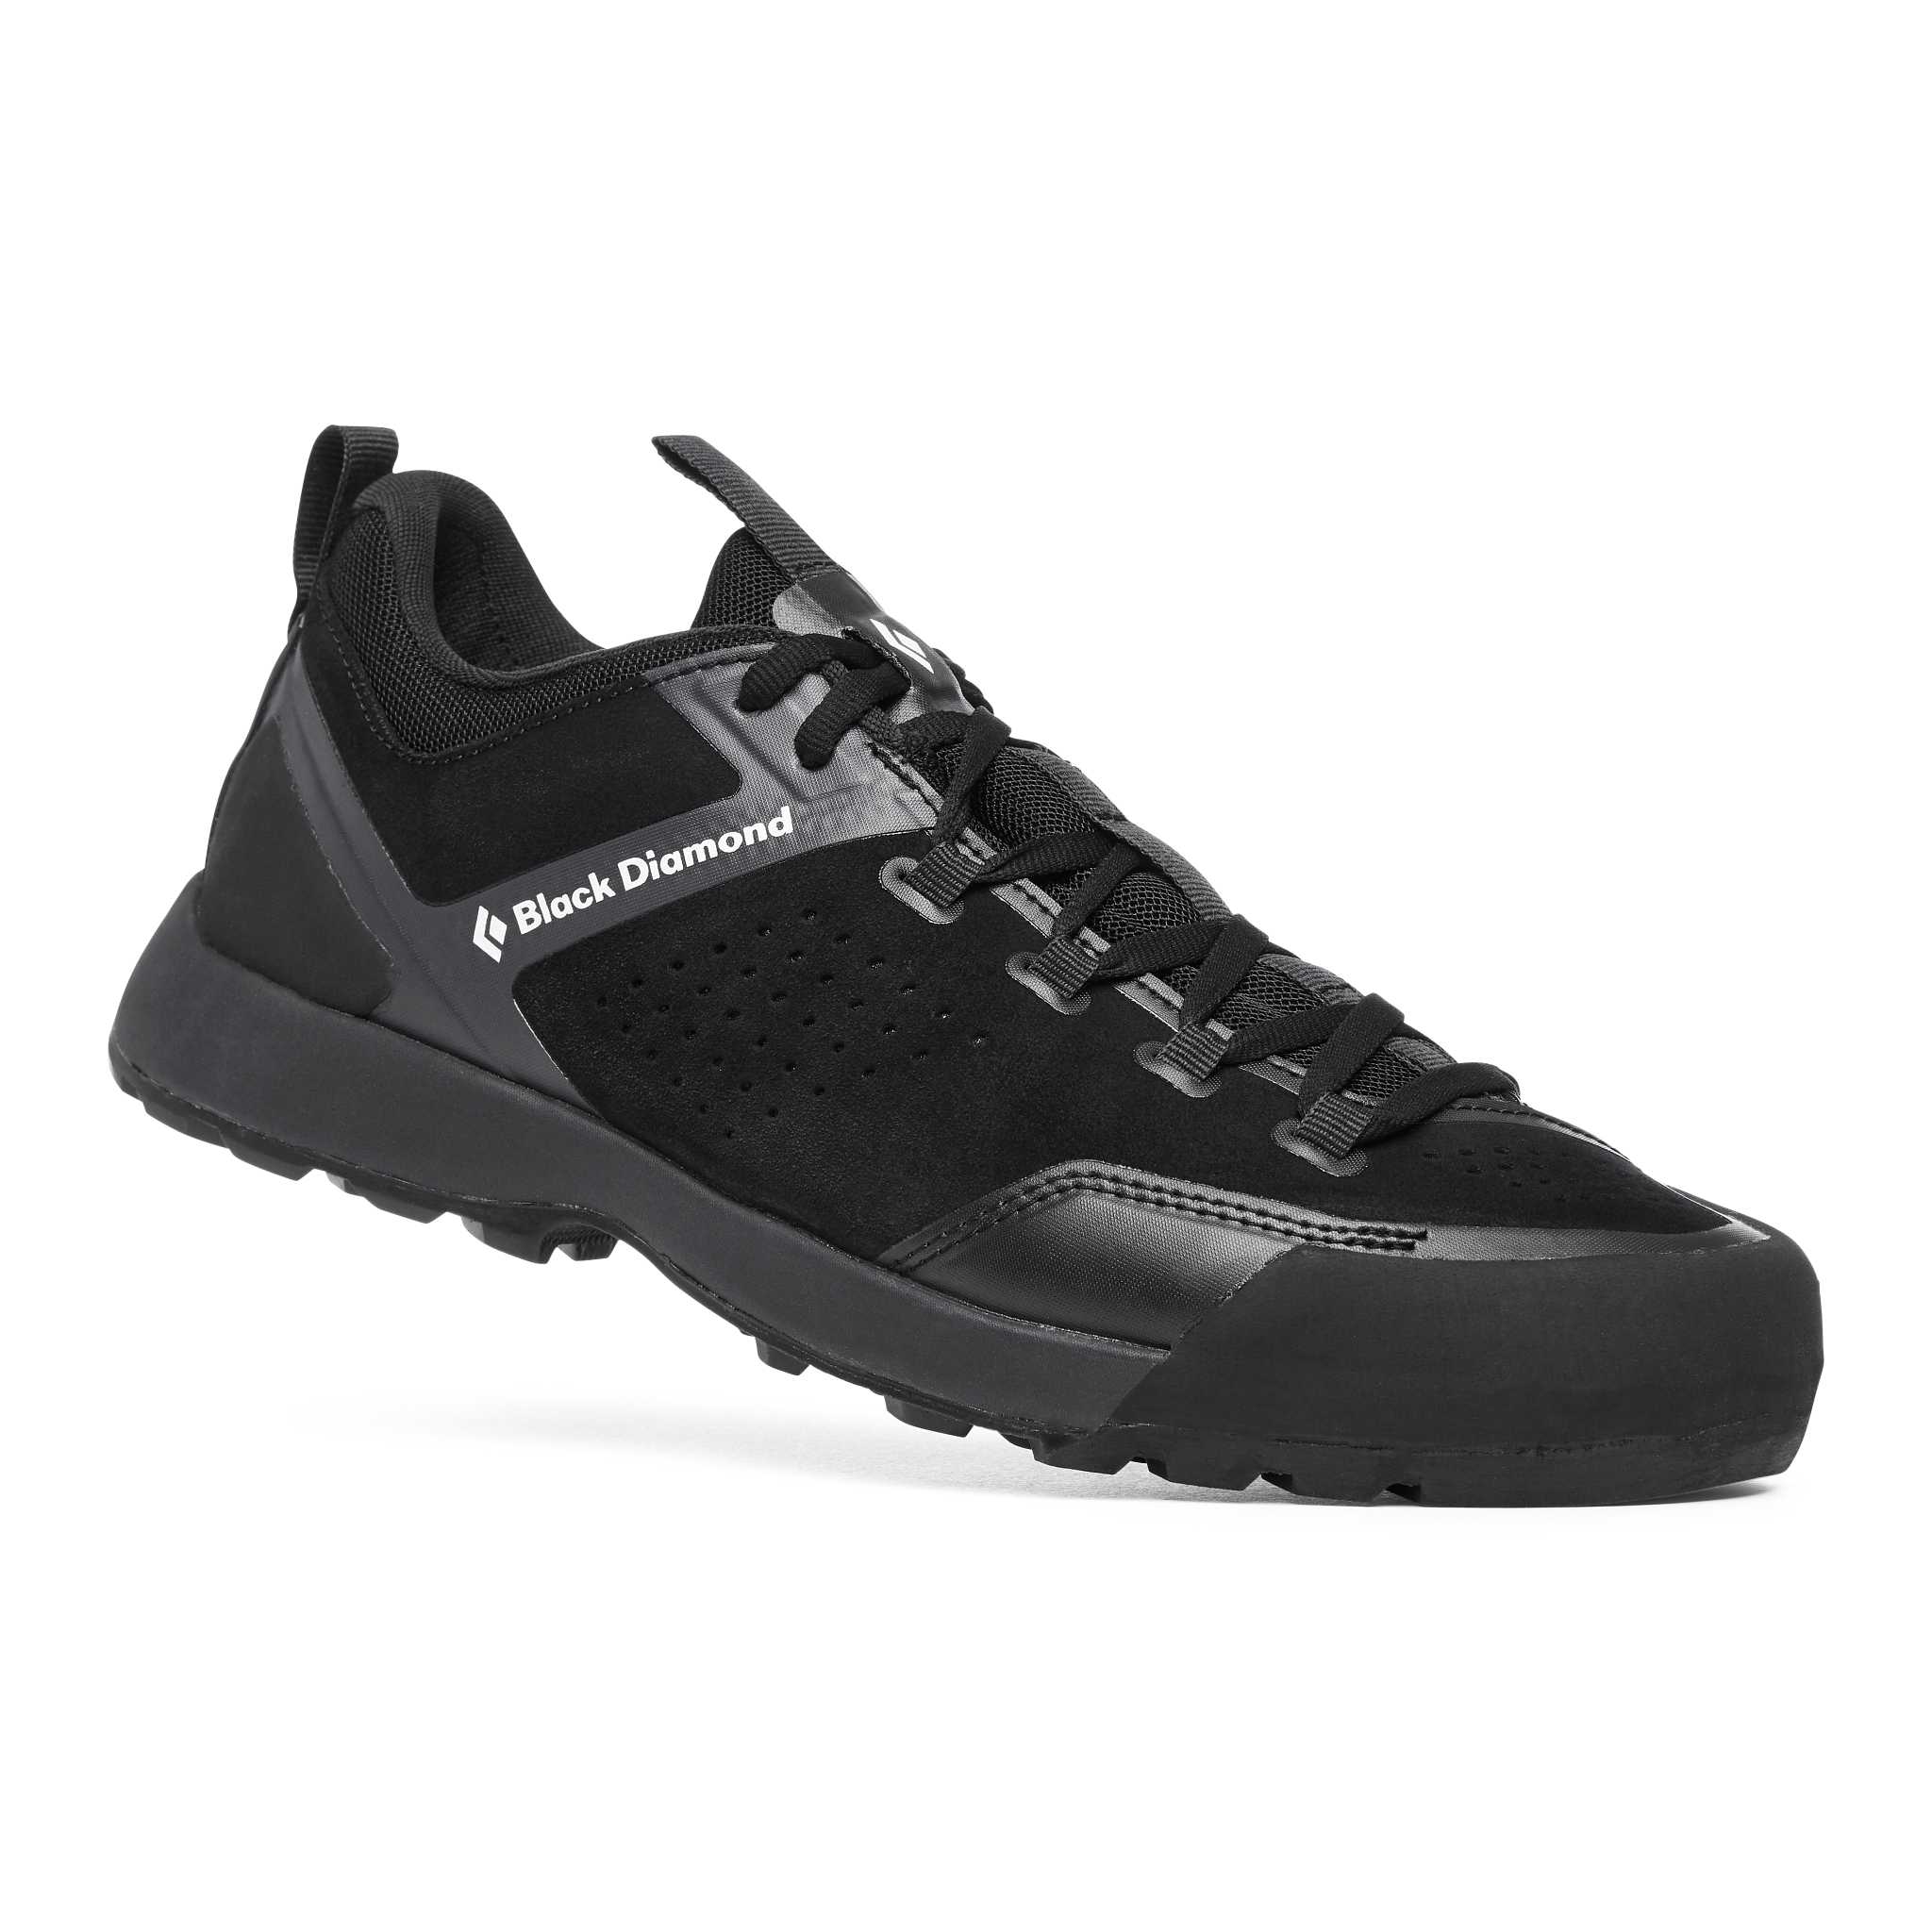 Black Diamond Equipment Men's Mission XP Leather Approach Shoes US 10 Black/Granite